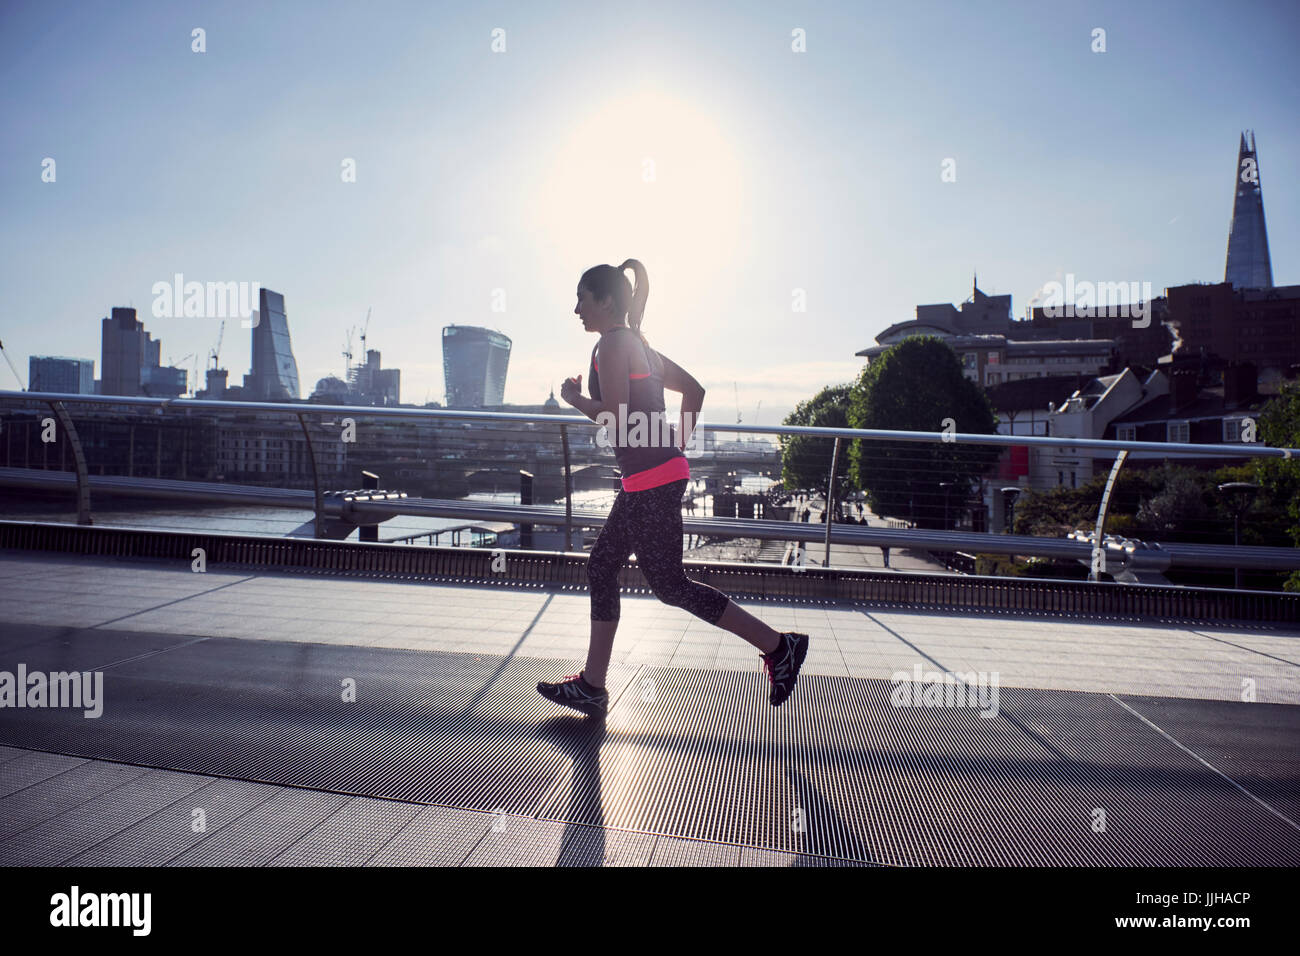 A woman running over the Millennium Bridge in London. Stock Photo